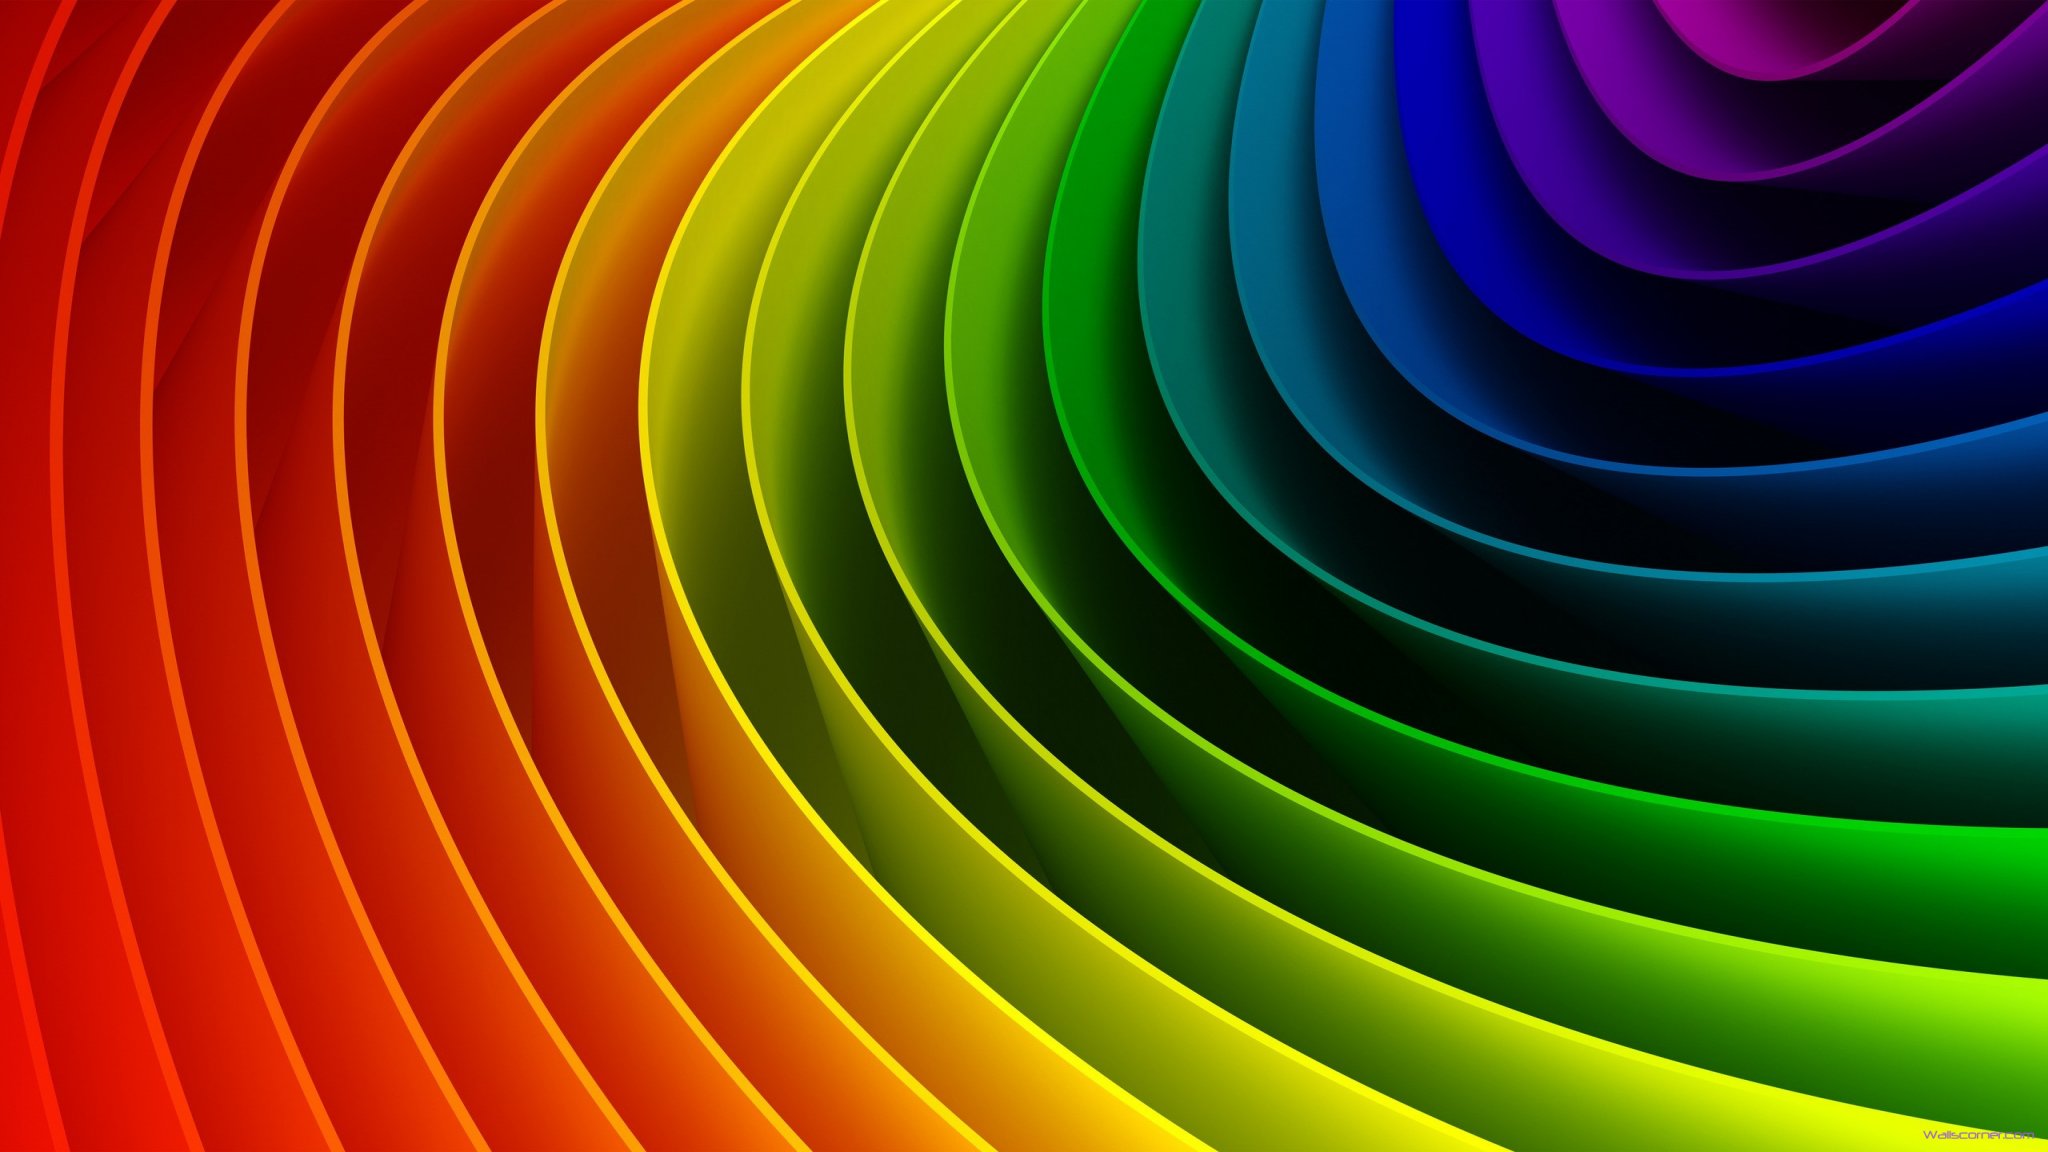 Rainbow Wallpaper Image Galleries Imagekb